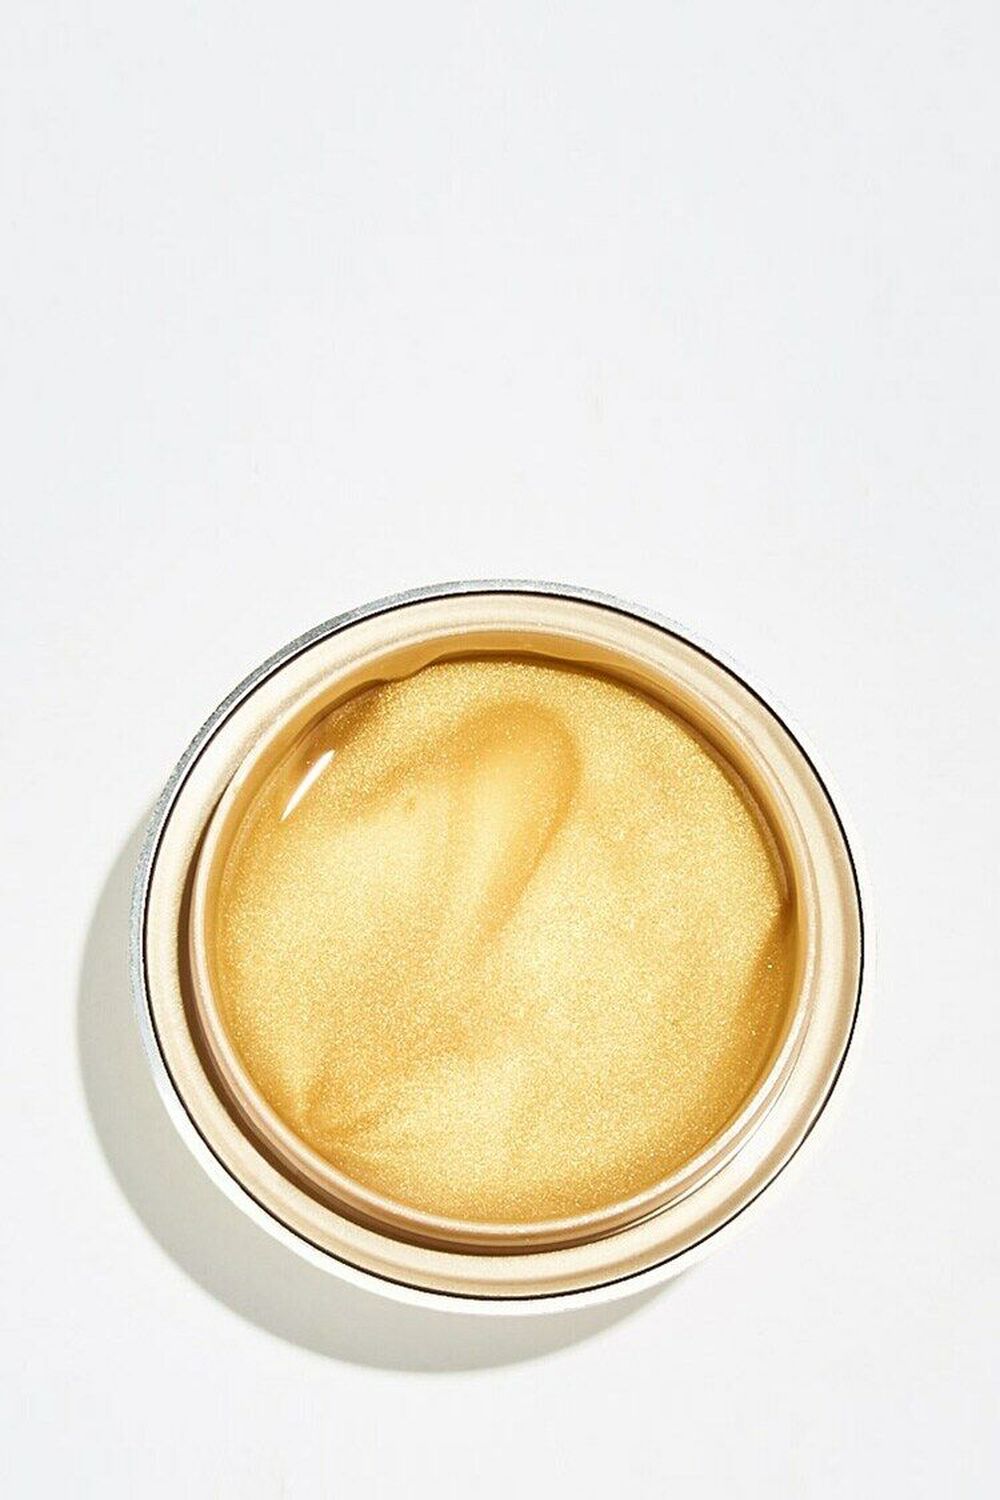 TONYMOLY Golden Pig Collagen Bounce Mask, image 2